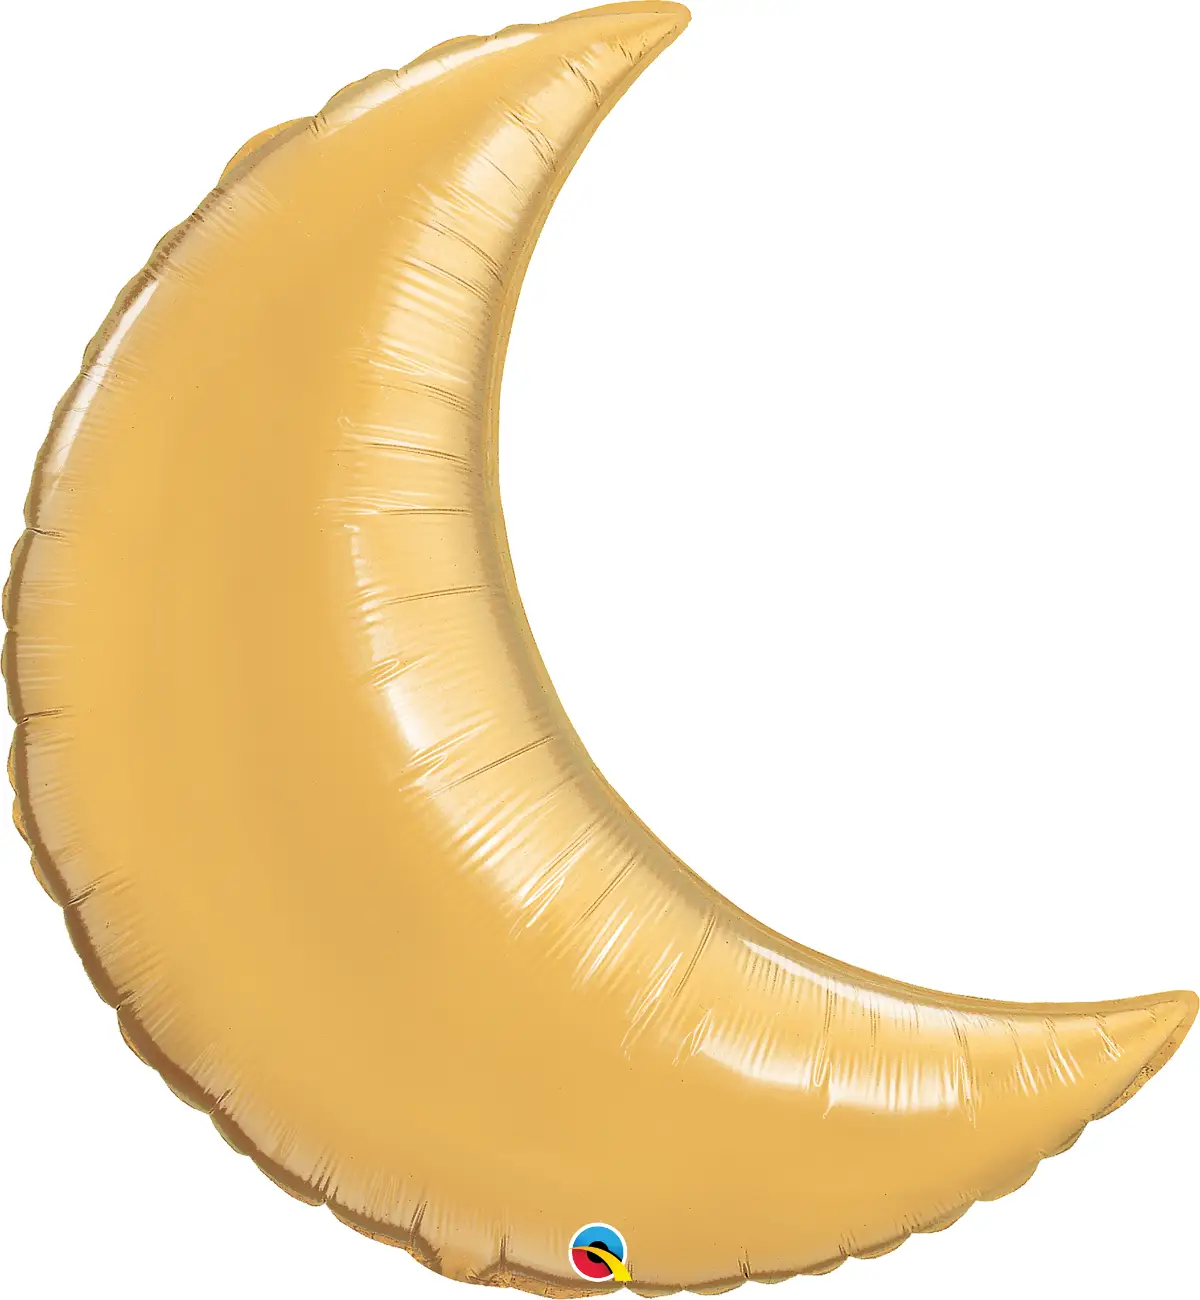 36” Gold half moon shape